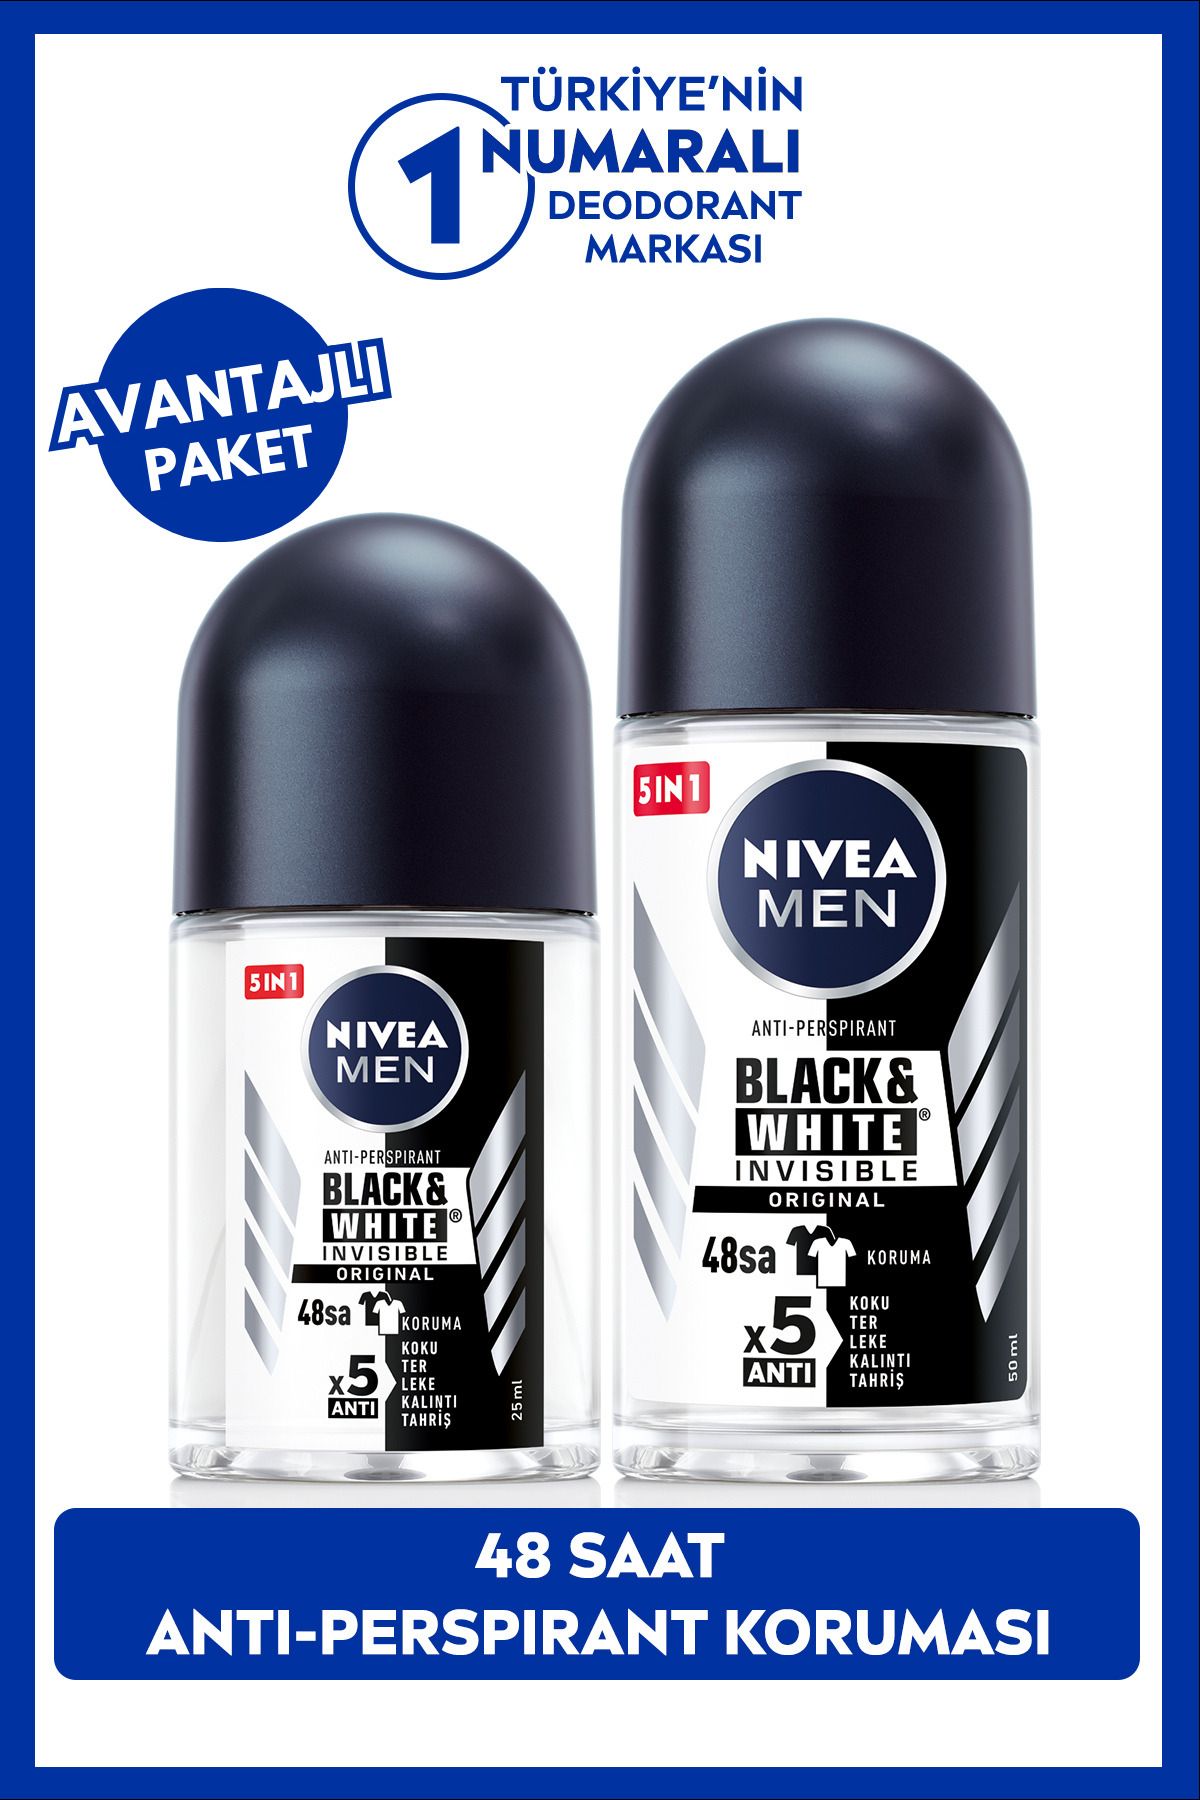 NIVEA Men Erkek Roll-on Deodorant Black&white 50ml Ve Mini Roll-on 25ml, Anti-perspirant, Avantajlı Paket